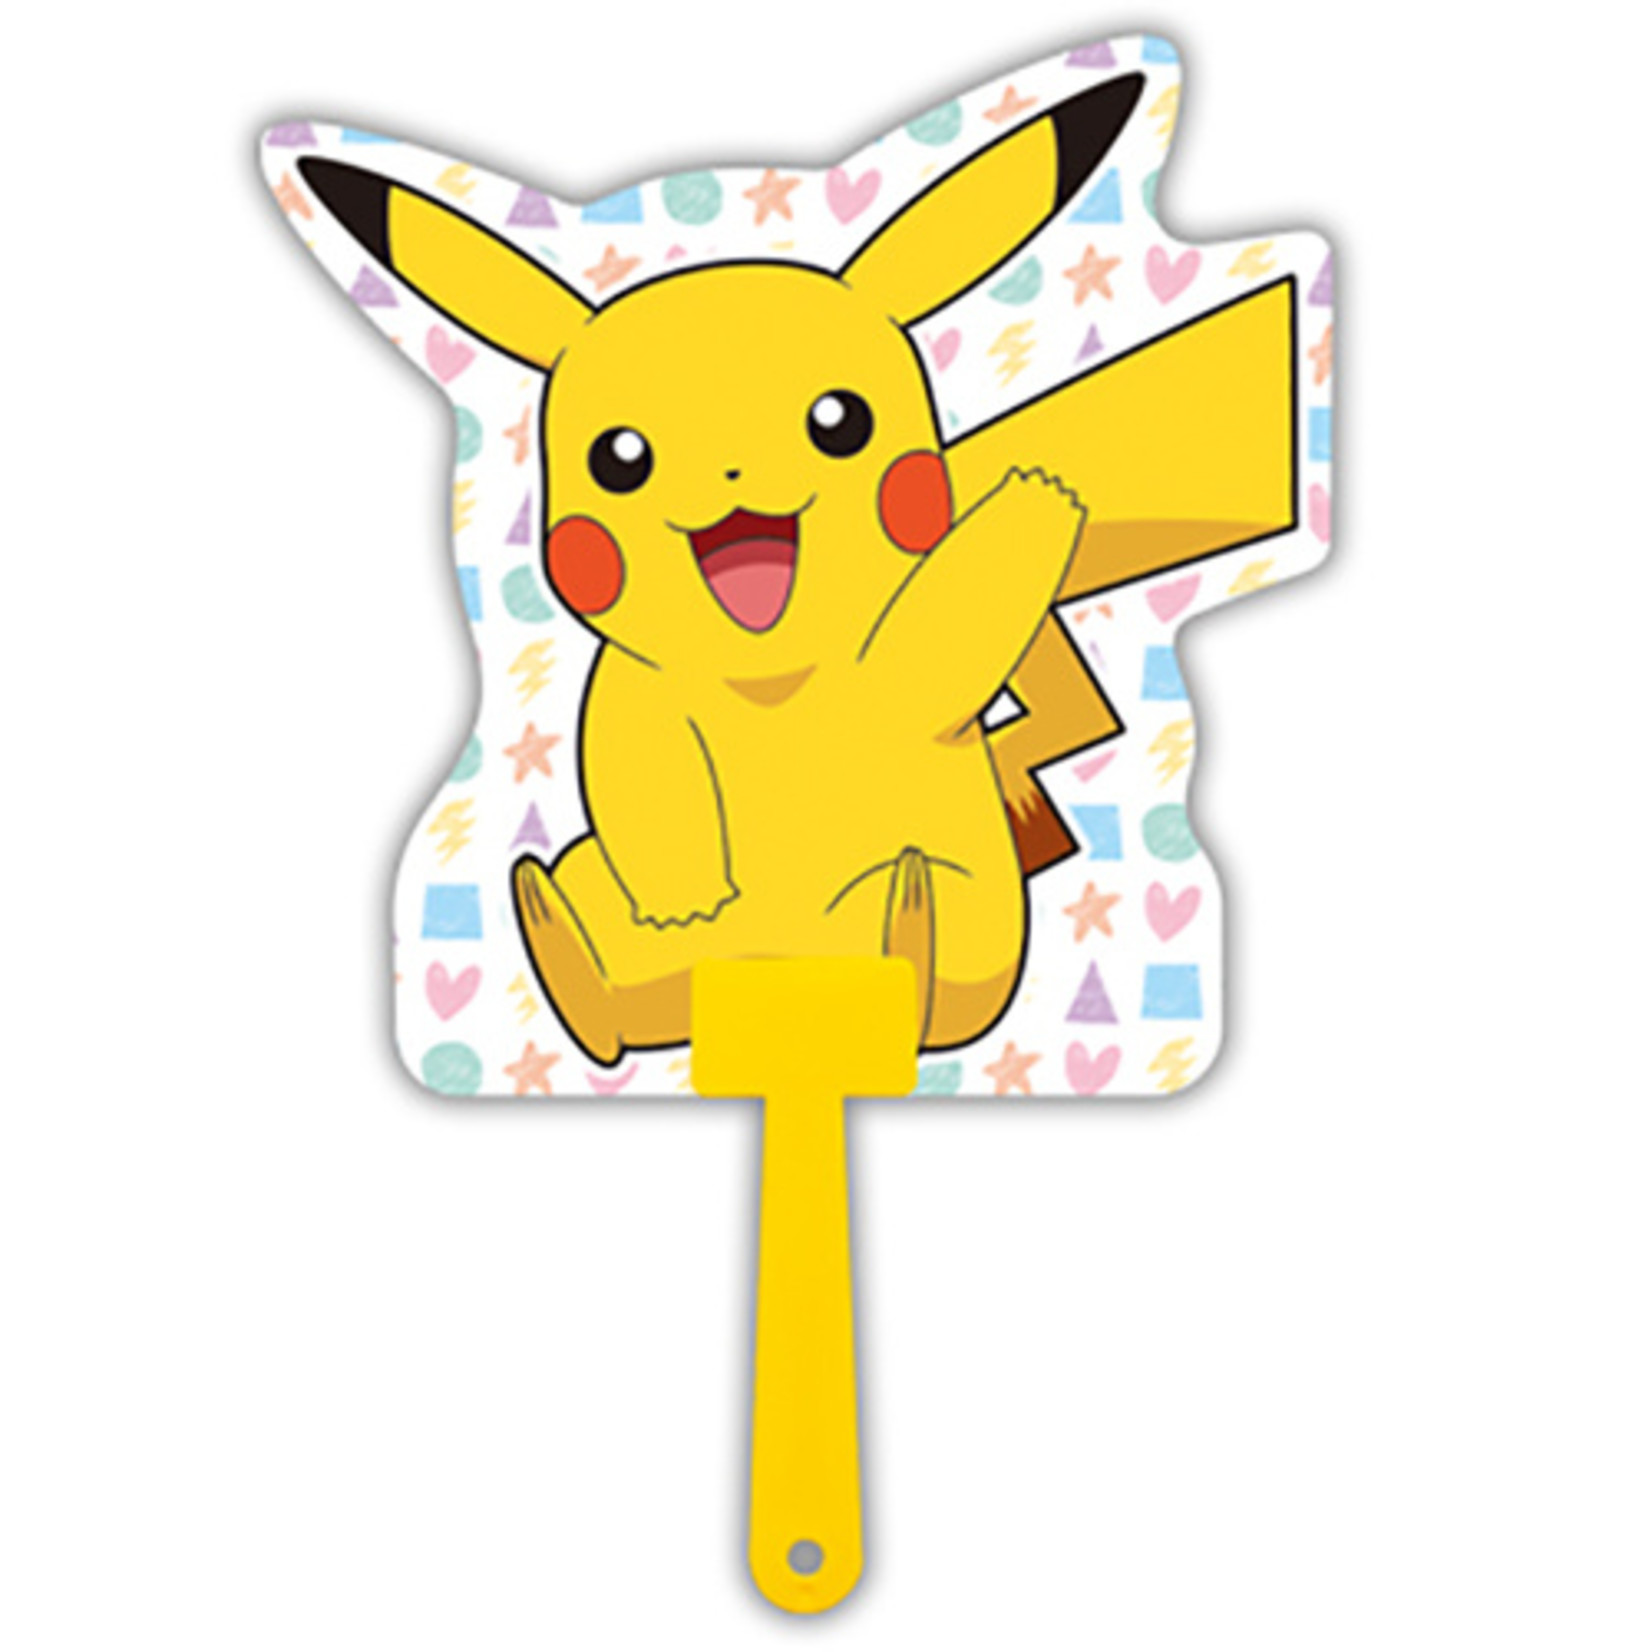 ShoPro FAN Pikachu Official 1035